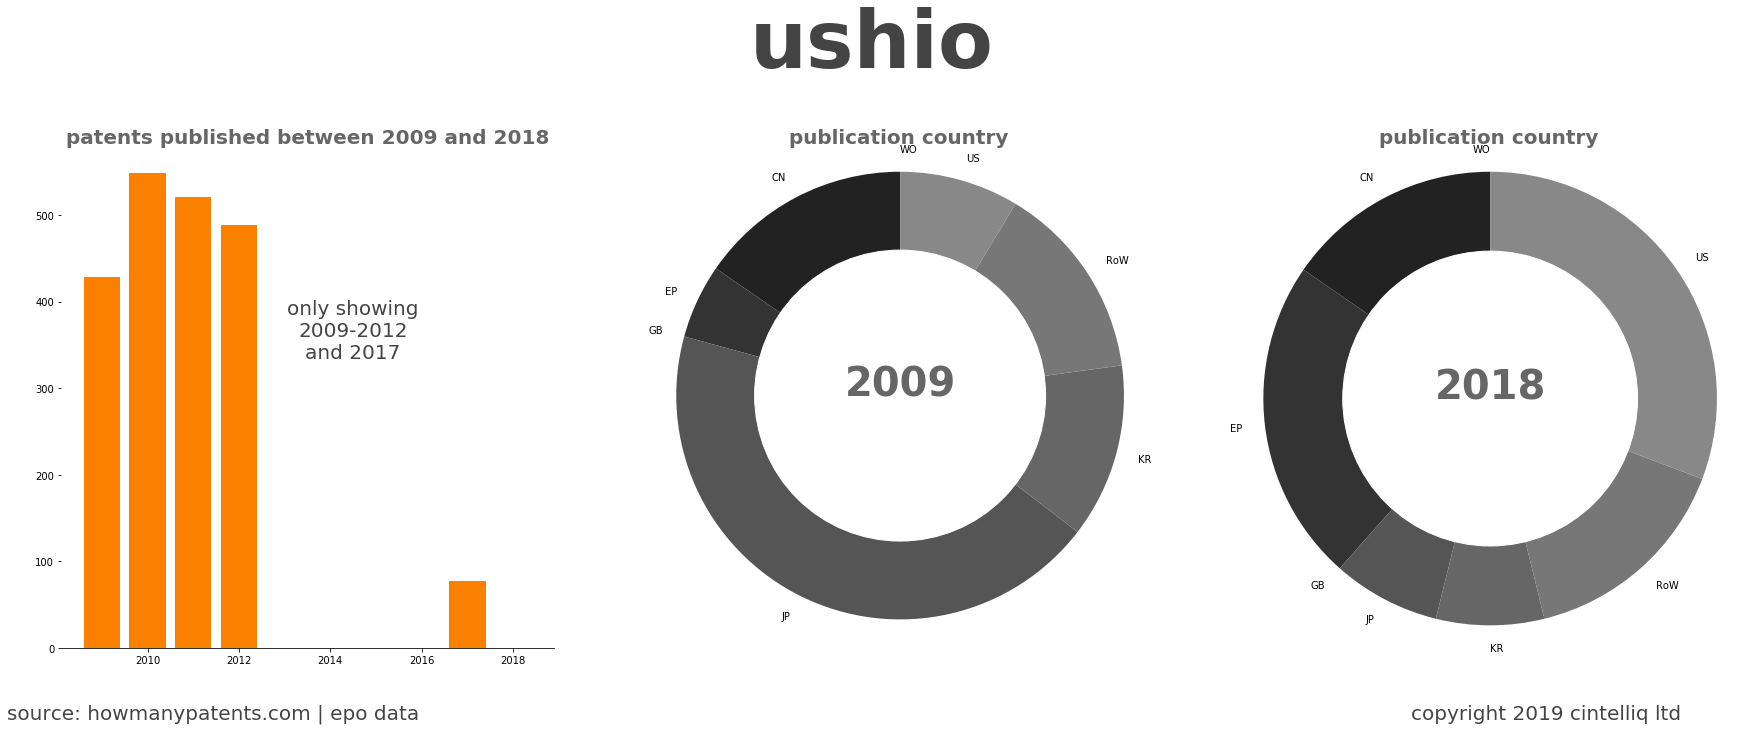 summary of patents for Ushio